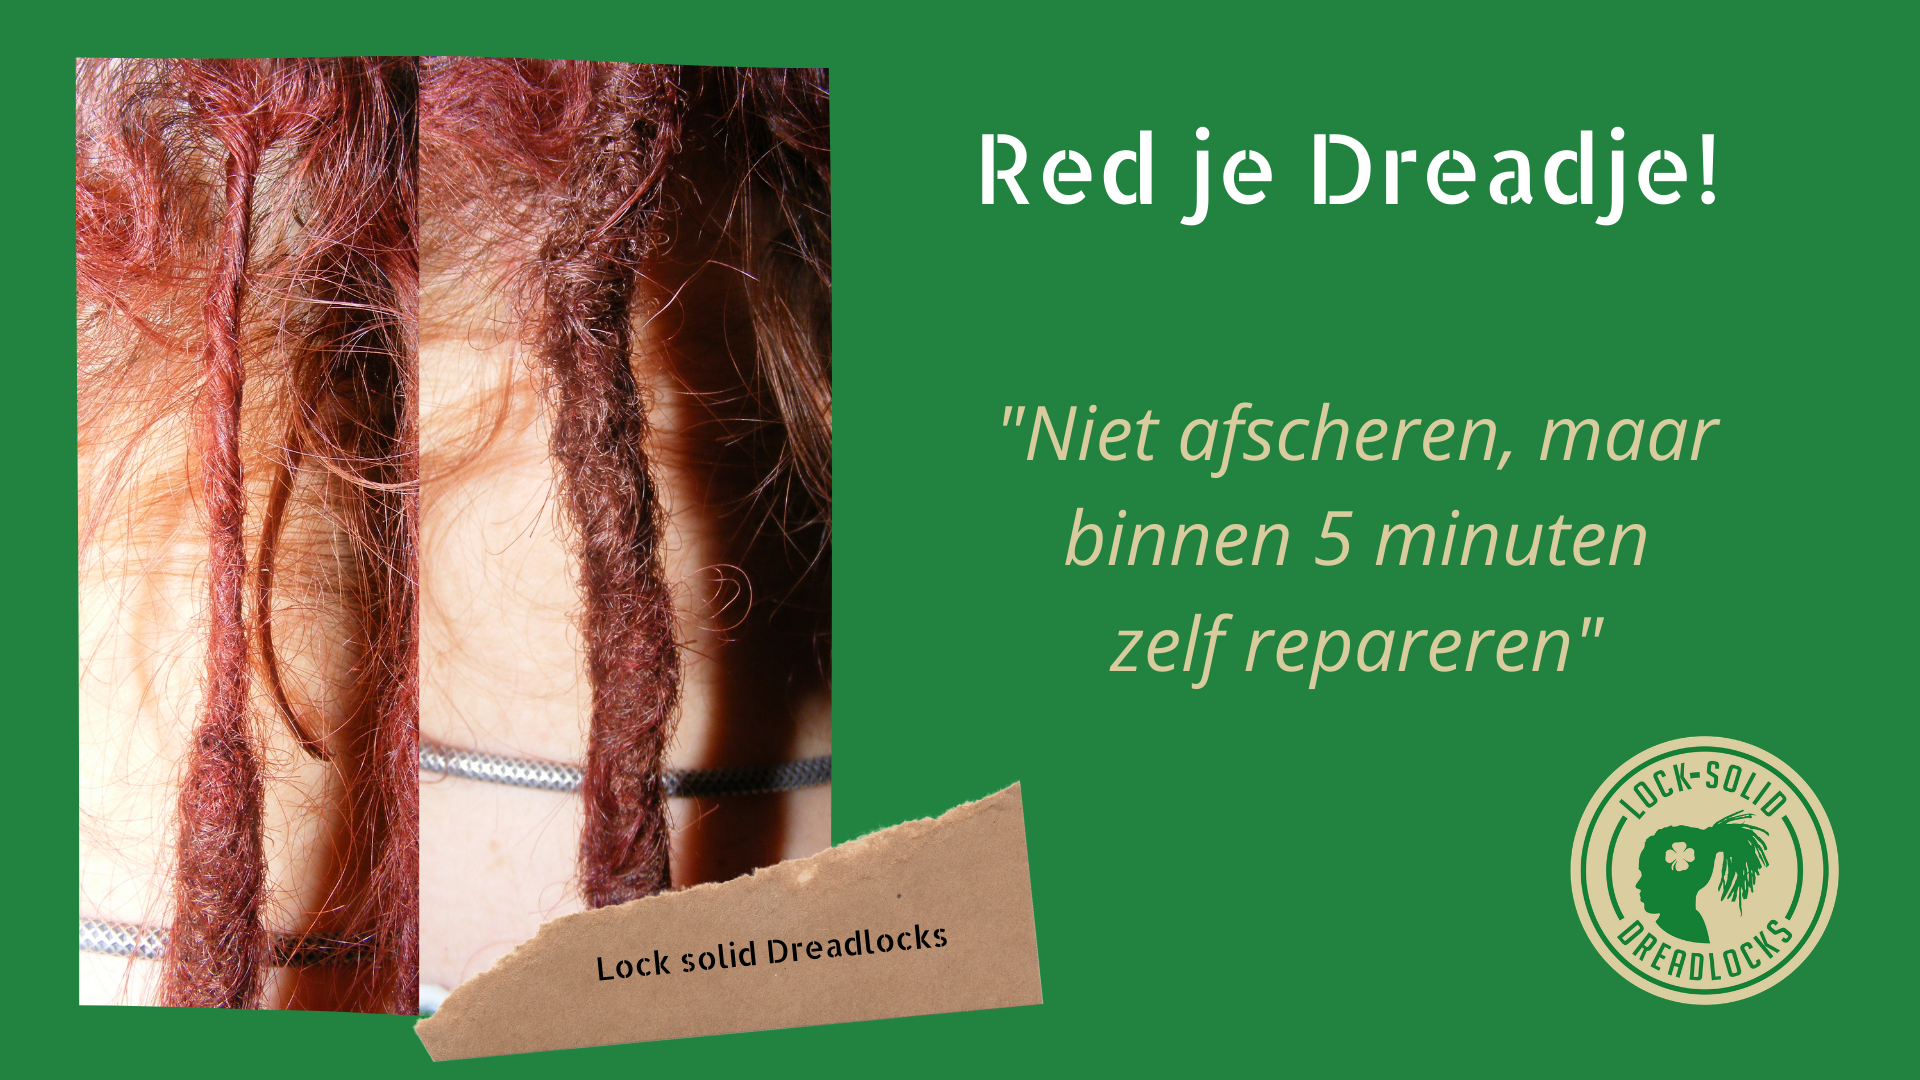 Red je dreadje dreadlock training - dreadkapper rotterdam - Lock Solid Dreadlocks - Alles Voor Dreads - Solid Locks Academy